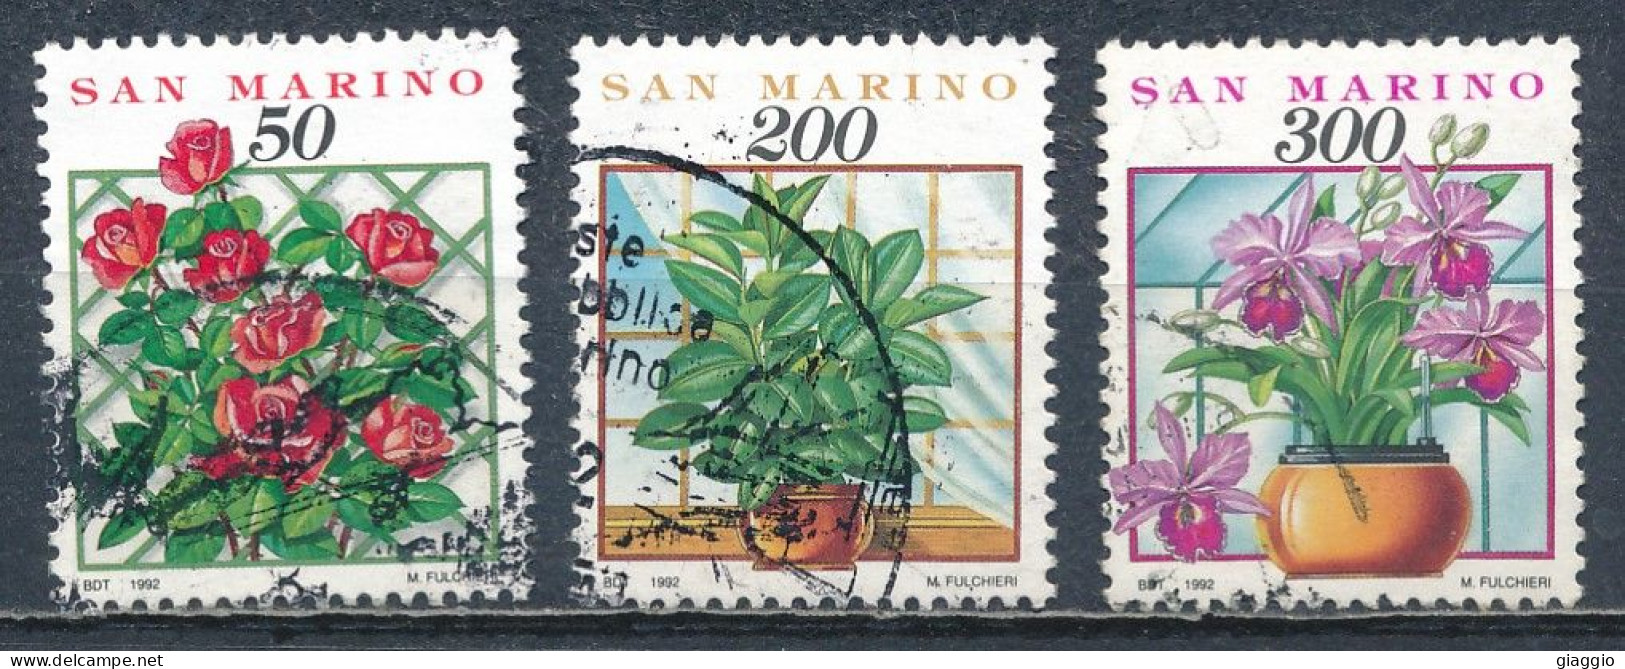 °°° SAN MARINO - Y&T N°1296/98 - 1992 °°° - Used Stamps